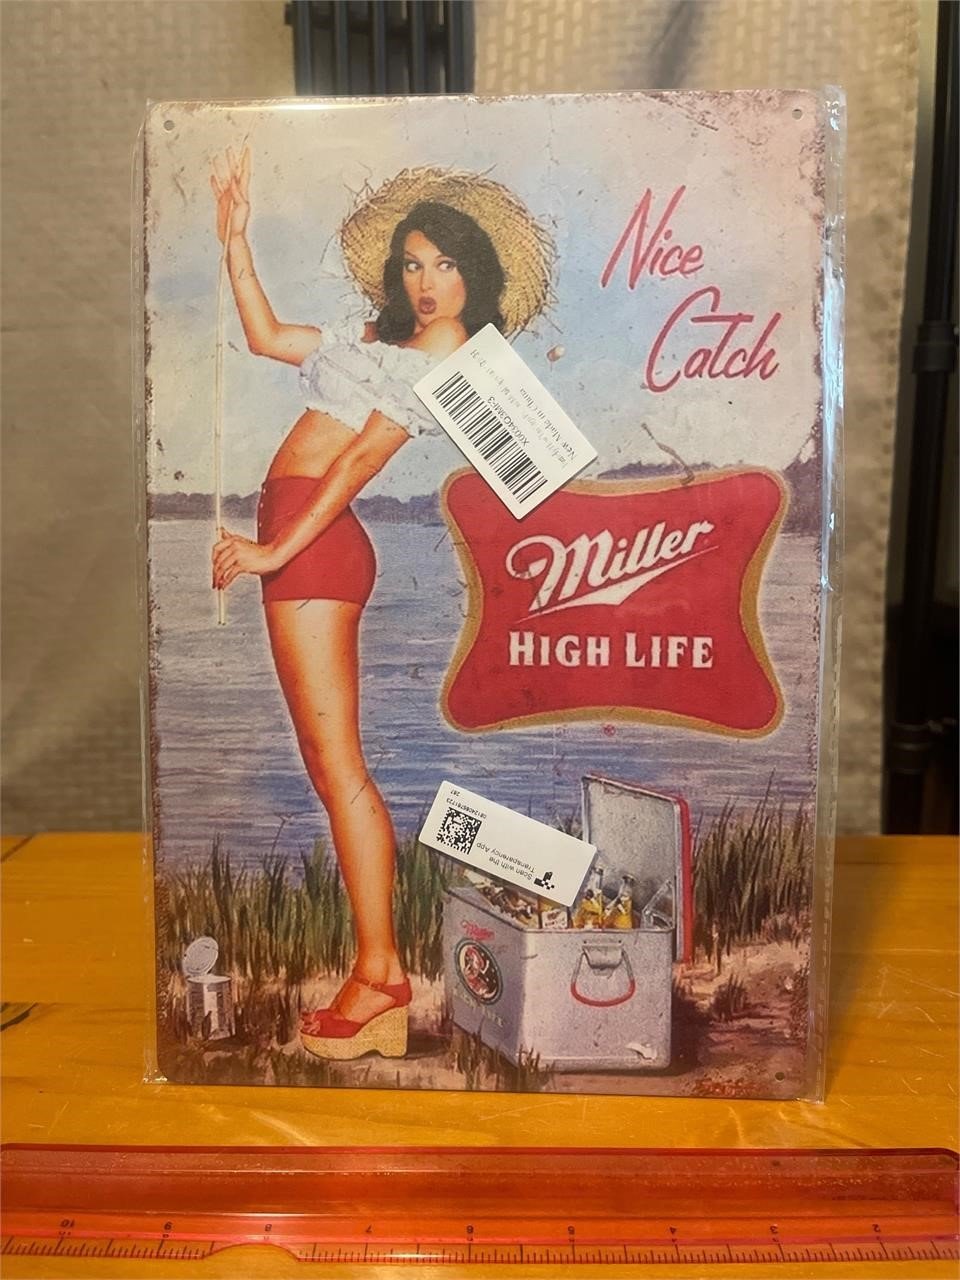 New Miller High Life “Nice Catch” metal sign